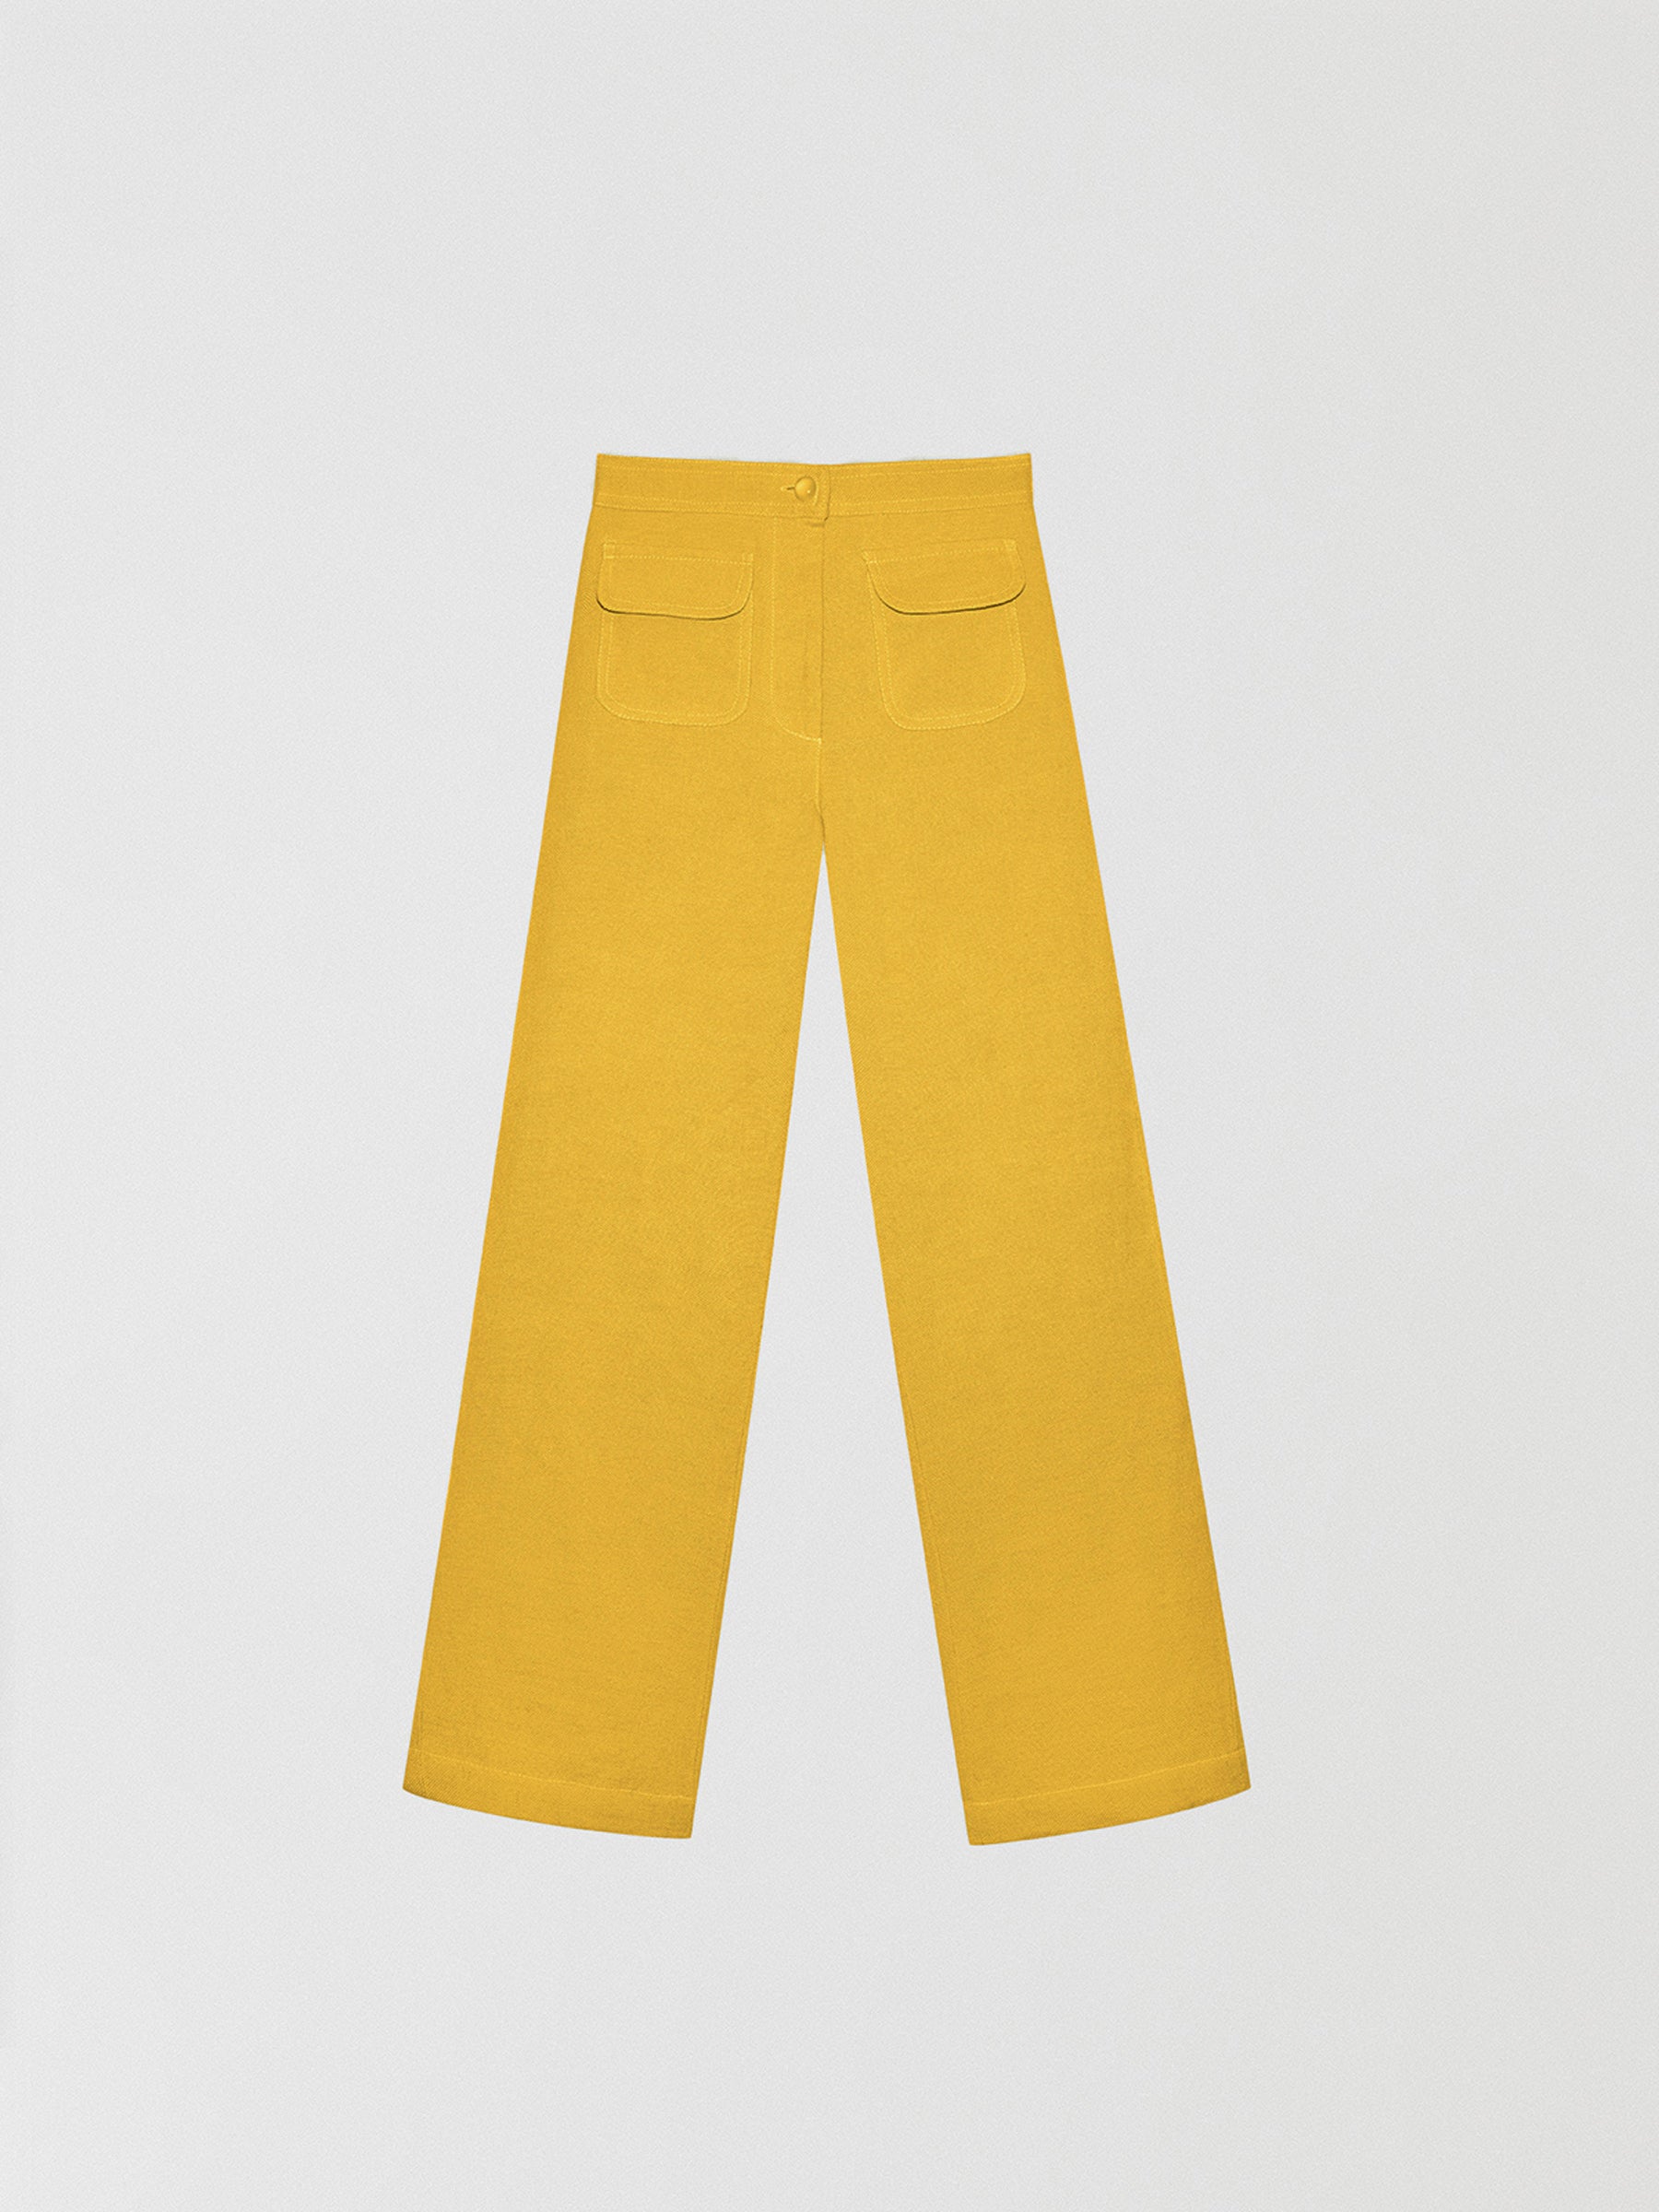 Loto Yellow Pants